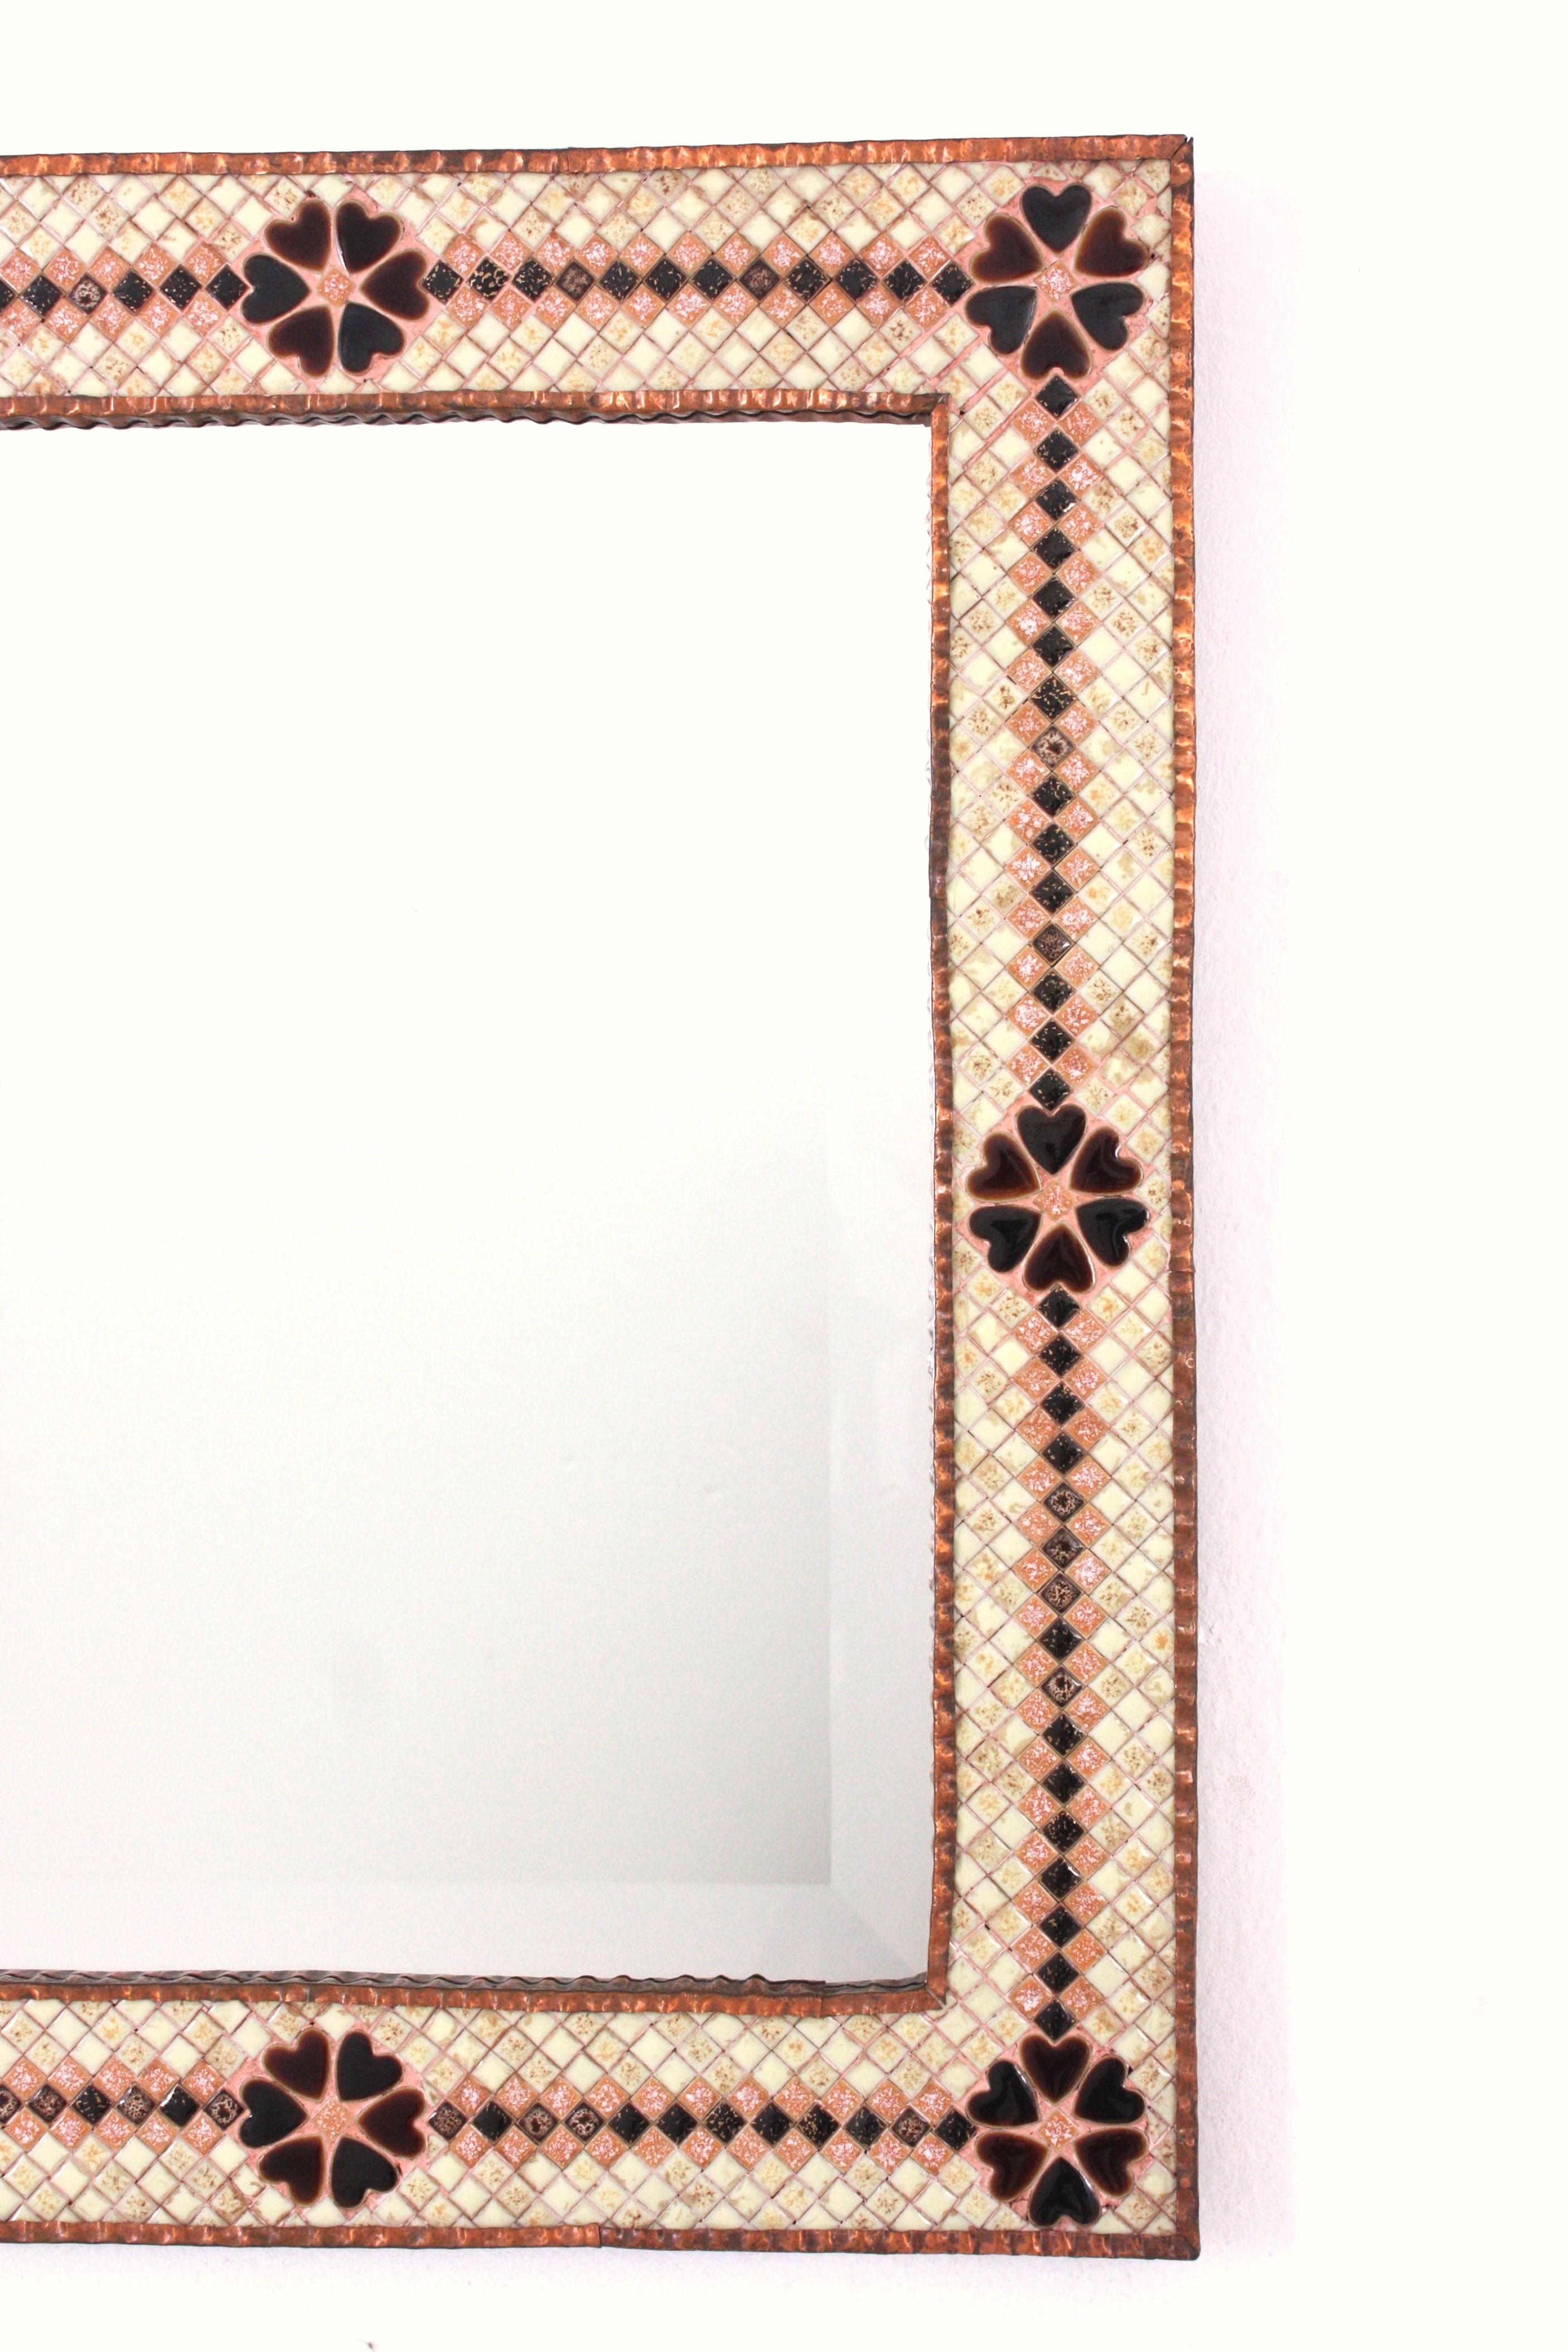 Spanish Tile Mosaic Rectangular Mirror in Glazed Ceramic, 1950s For Sale 5